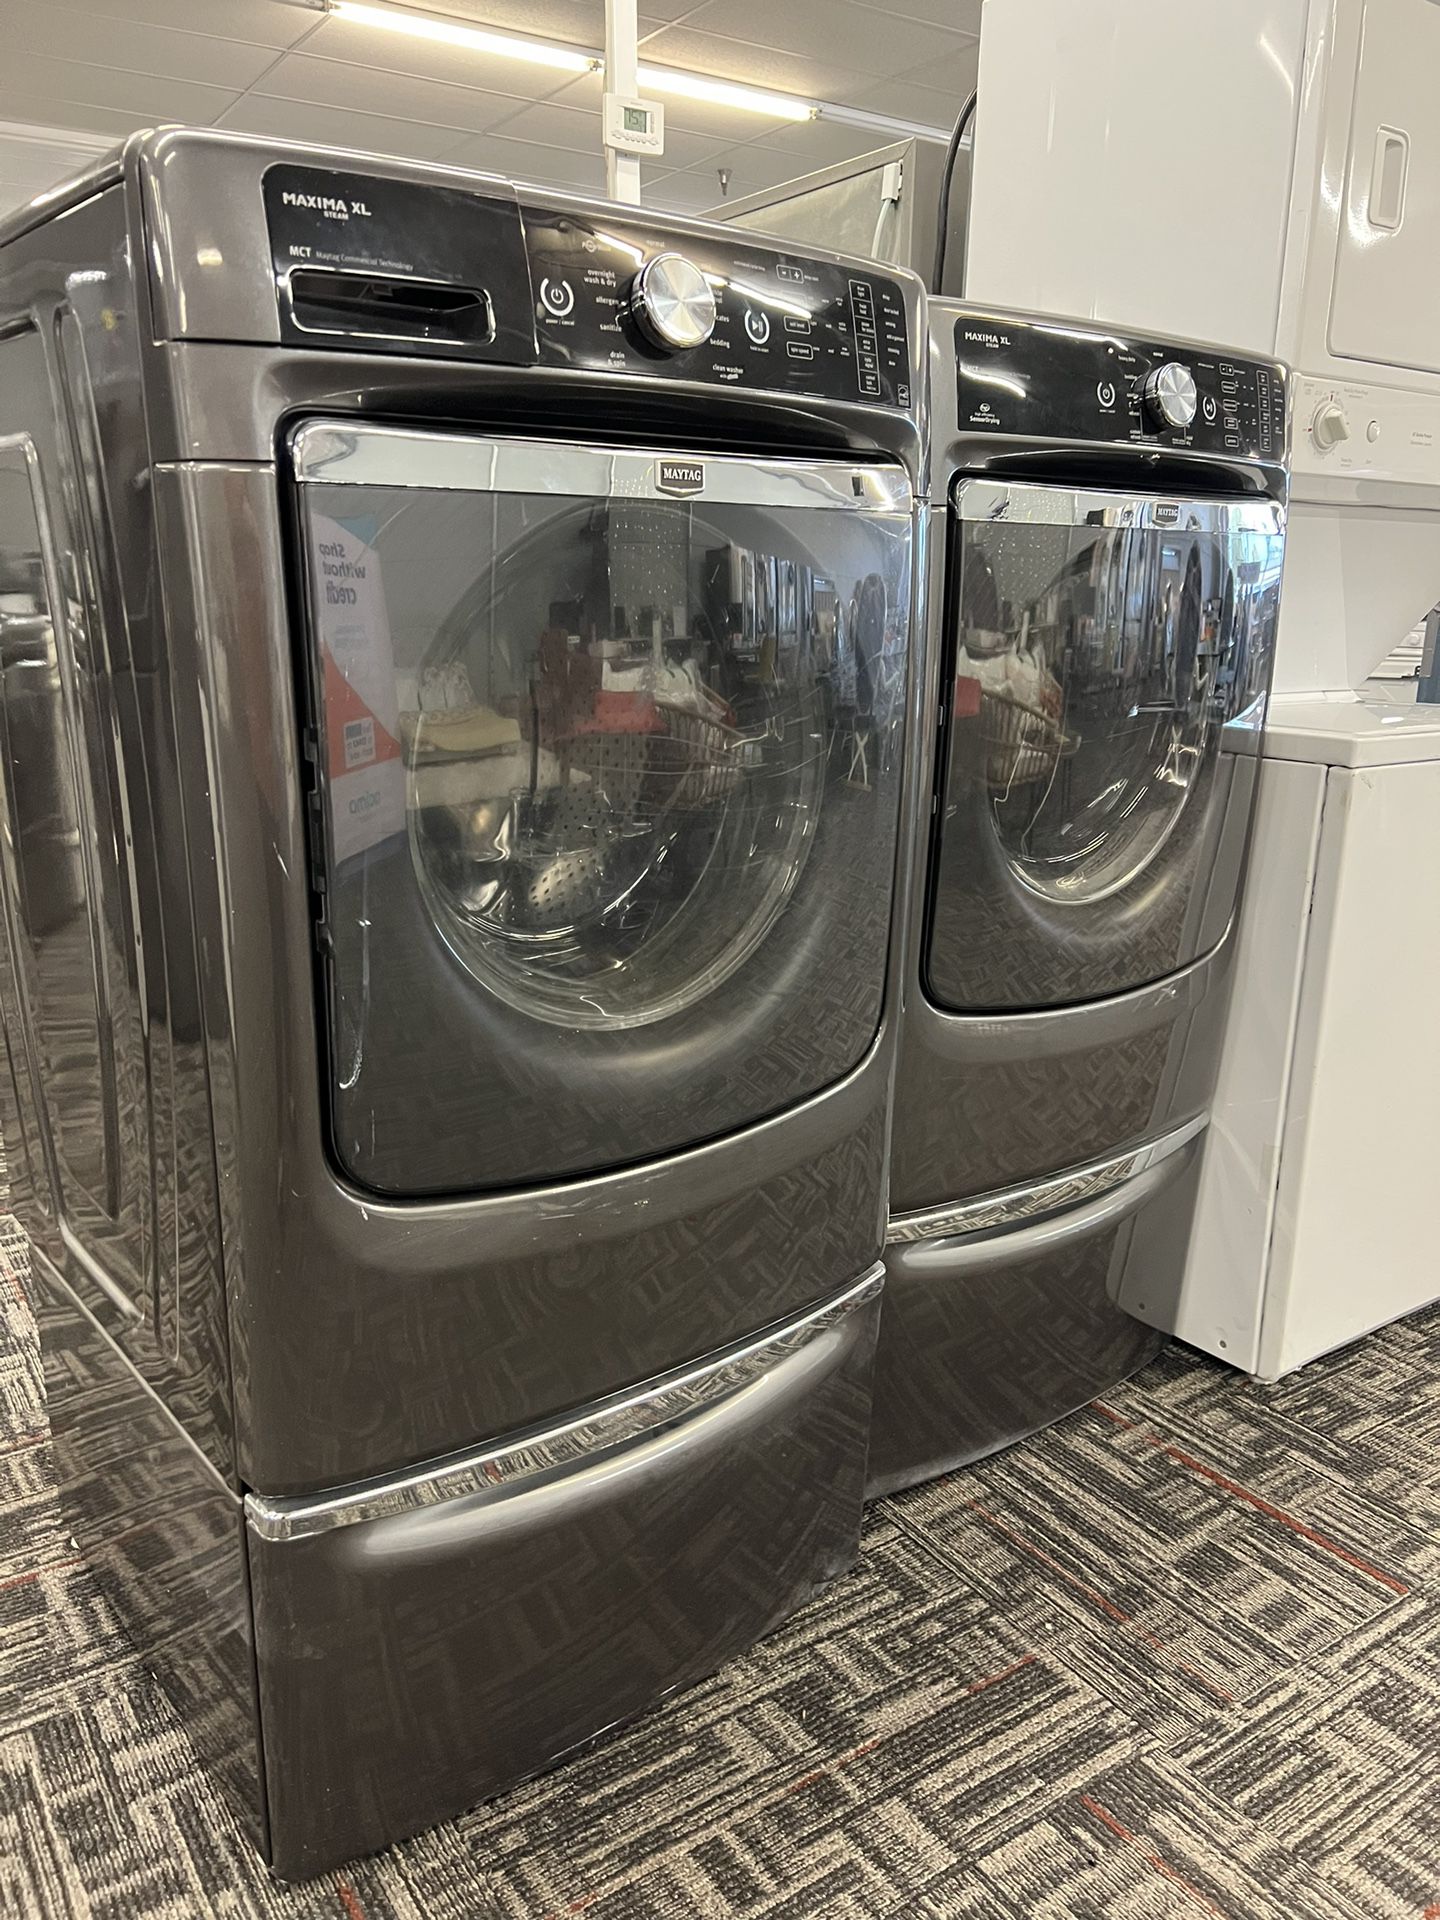 Panda Portable Washing Machine for Sale in Phoenix, AZ - OfferUp